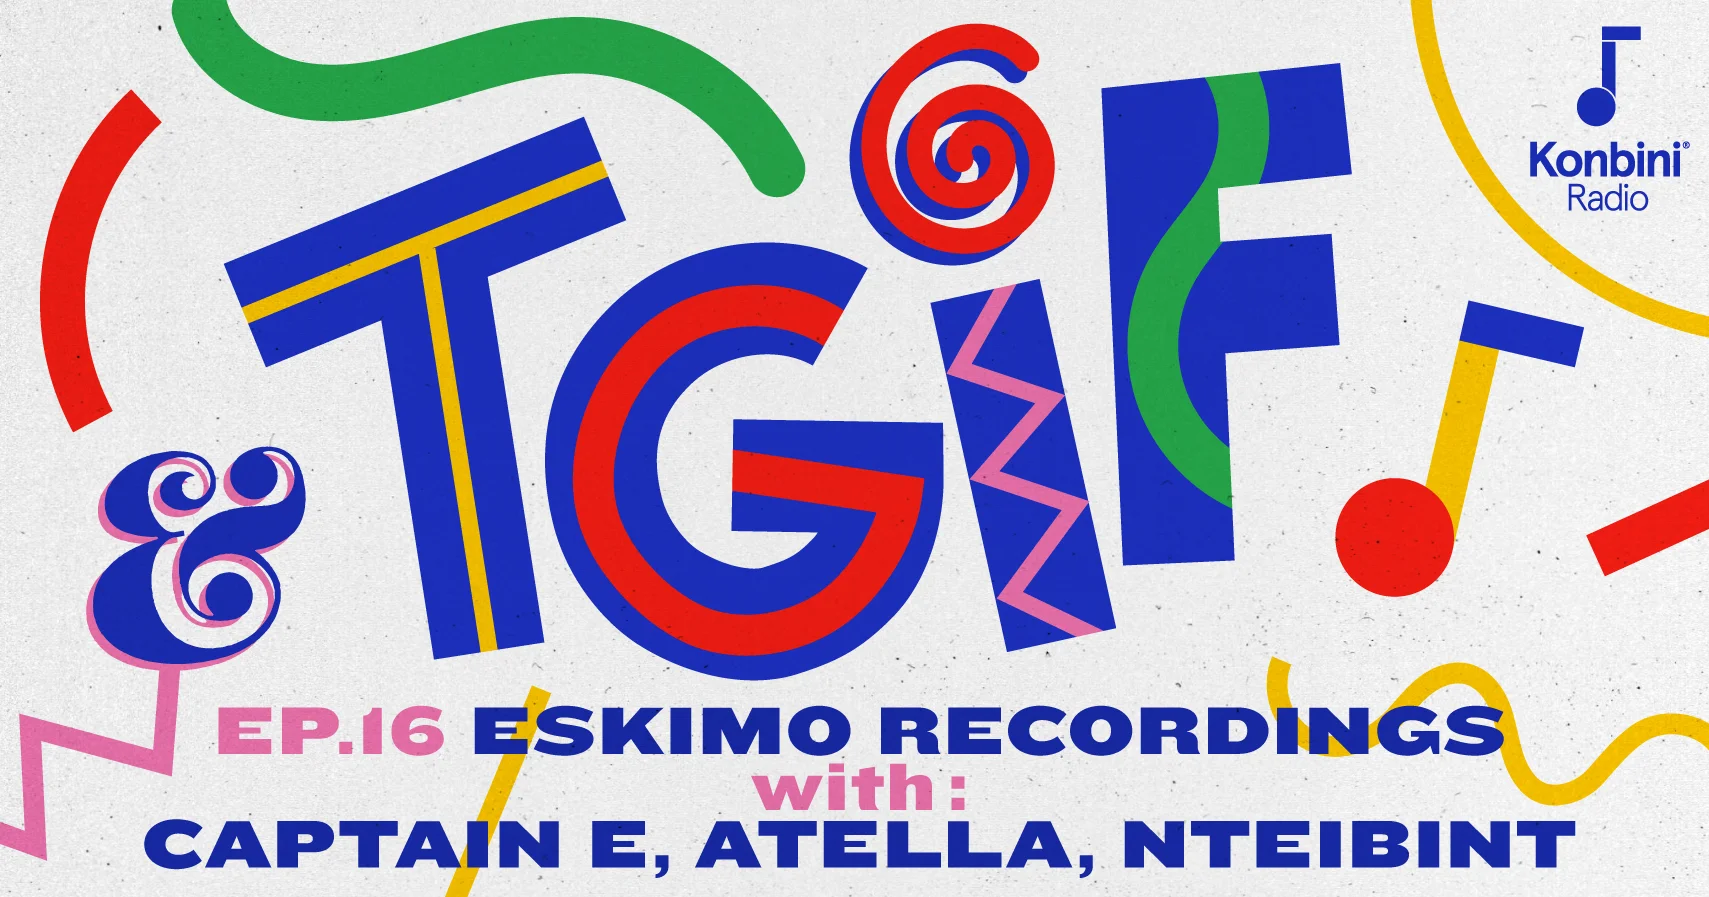 Konbini Radio : replay de l’émission TGIF spéciale Eskimo Recordings